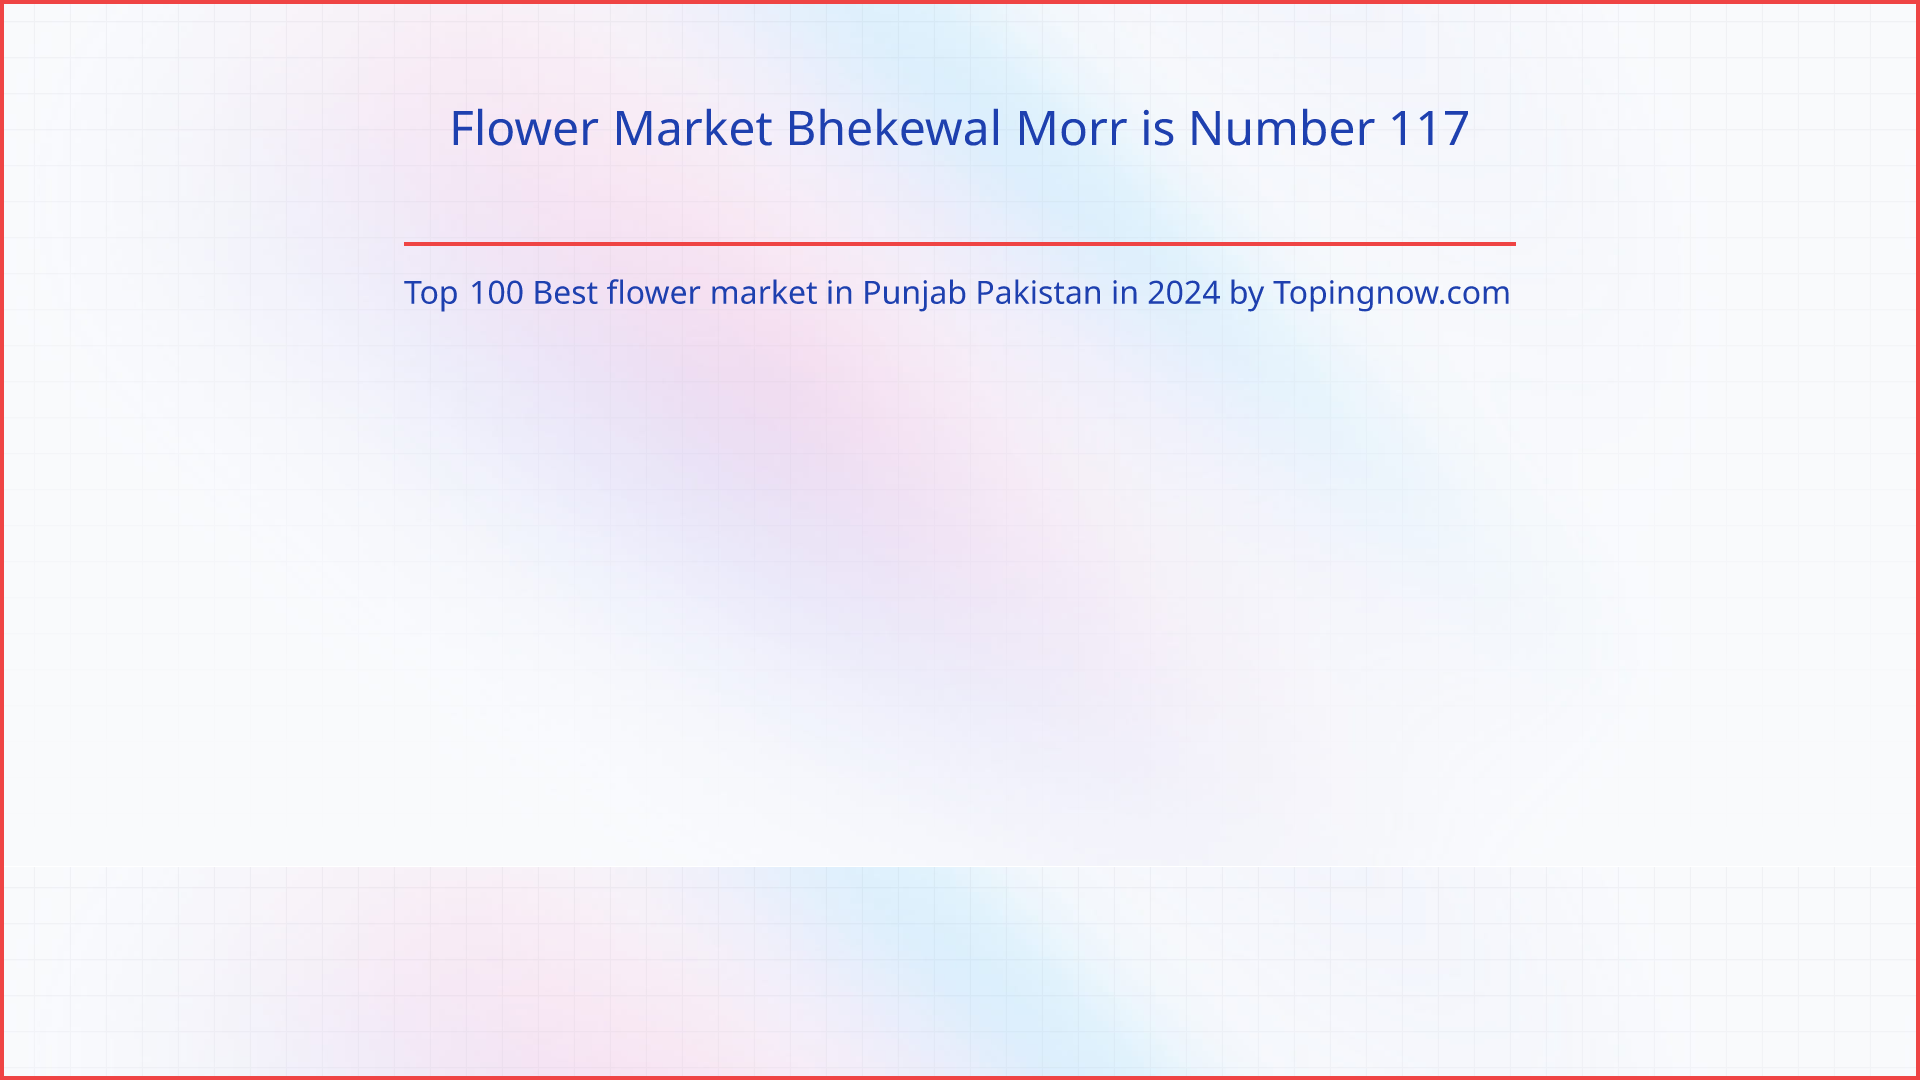 Flower Market Bhekewal Morr: Top 100 Best flower market in Punjab Pakistan in 2024